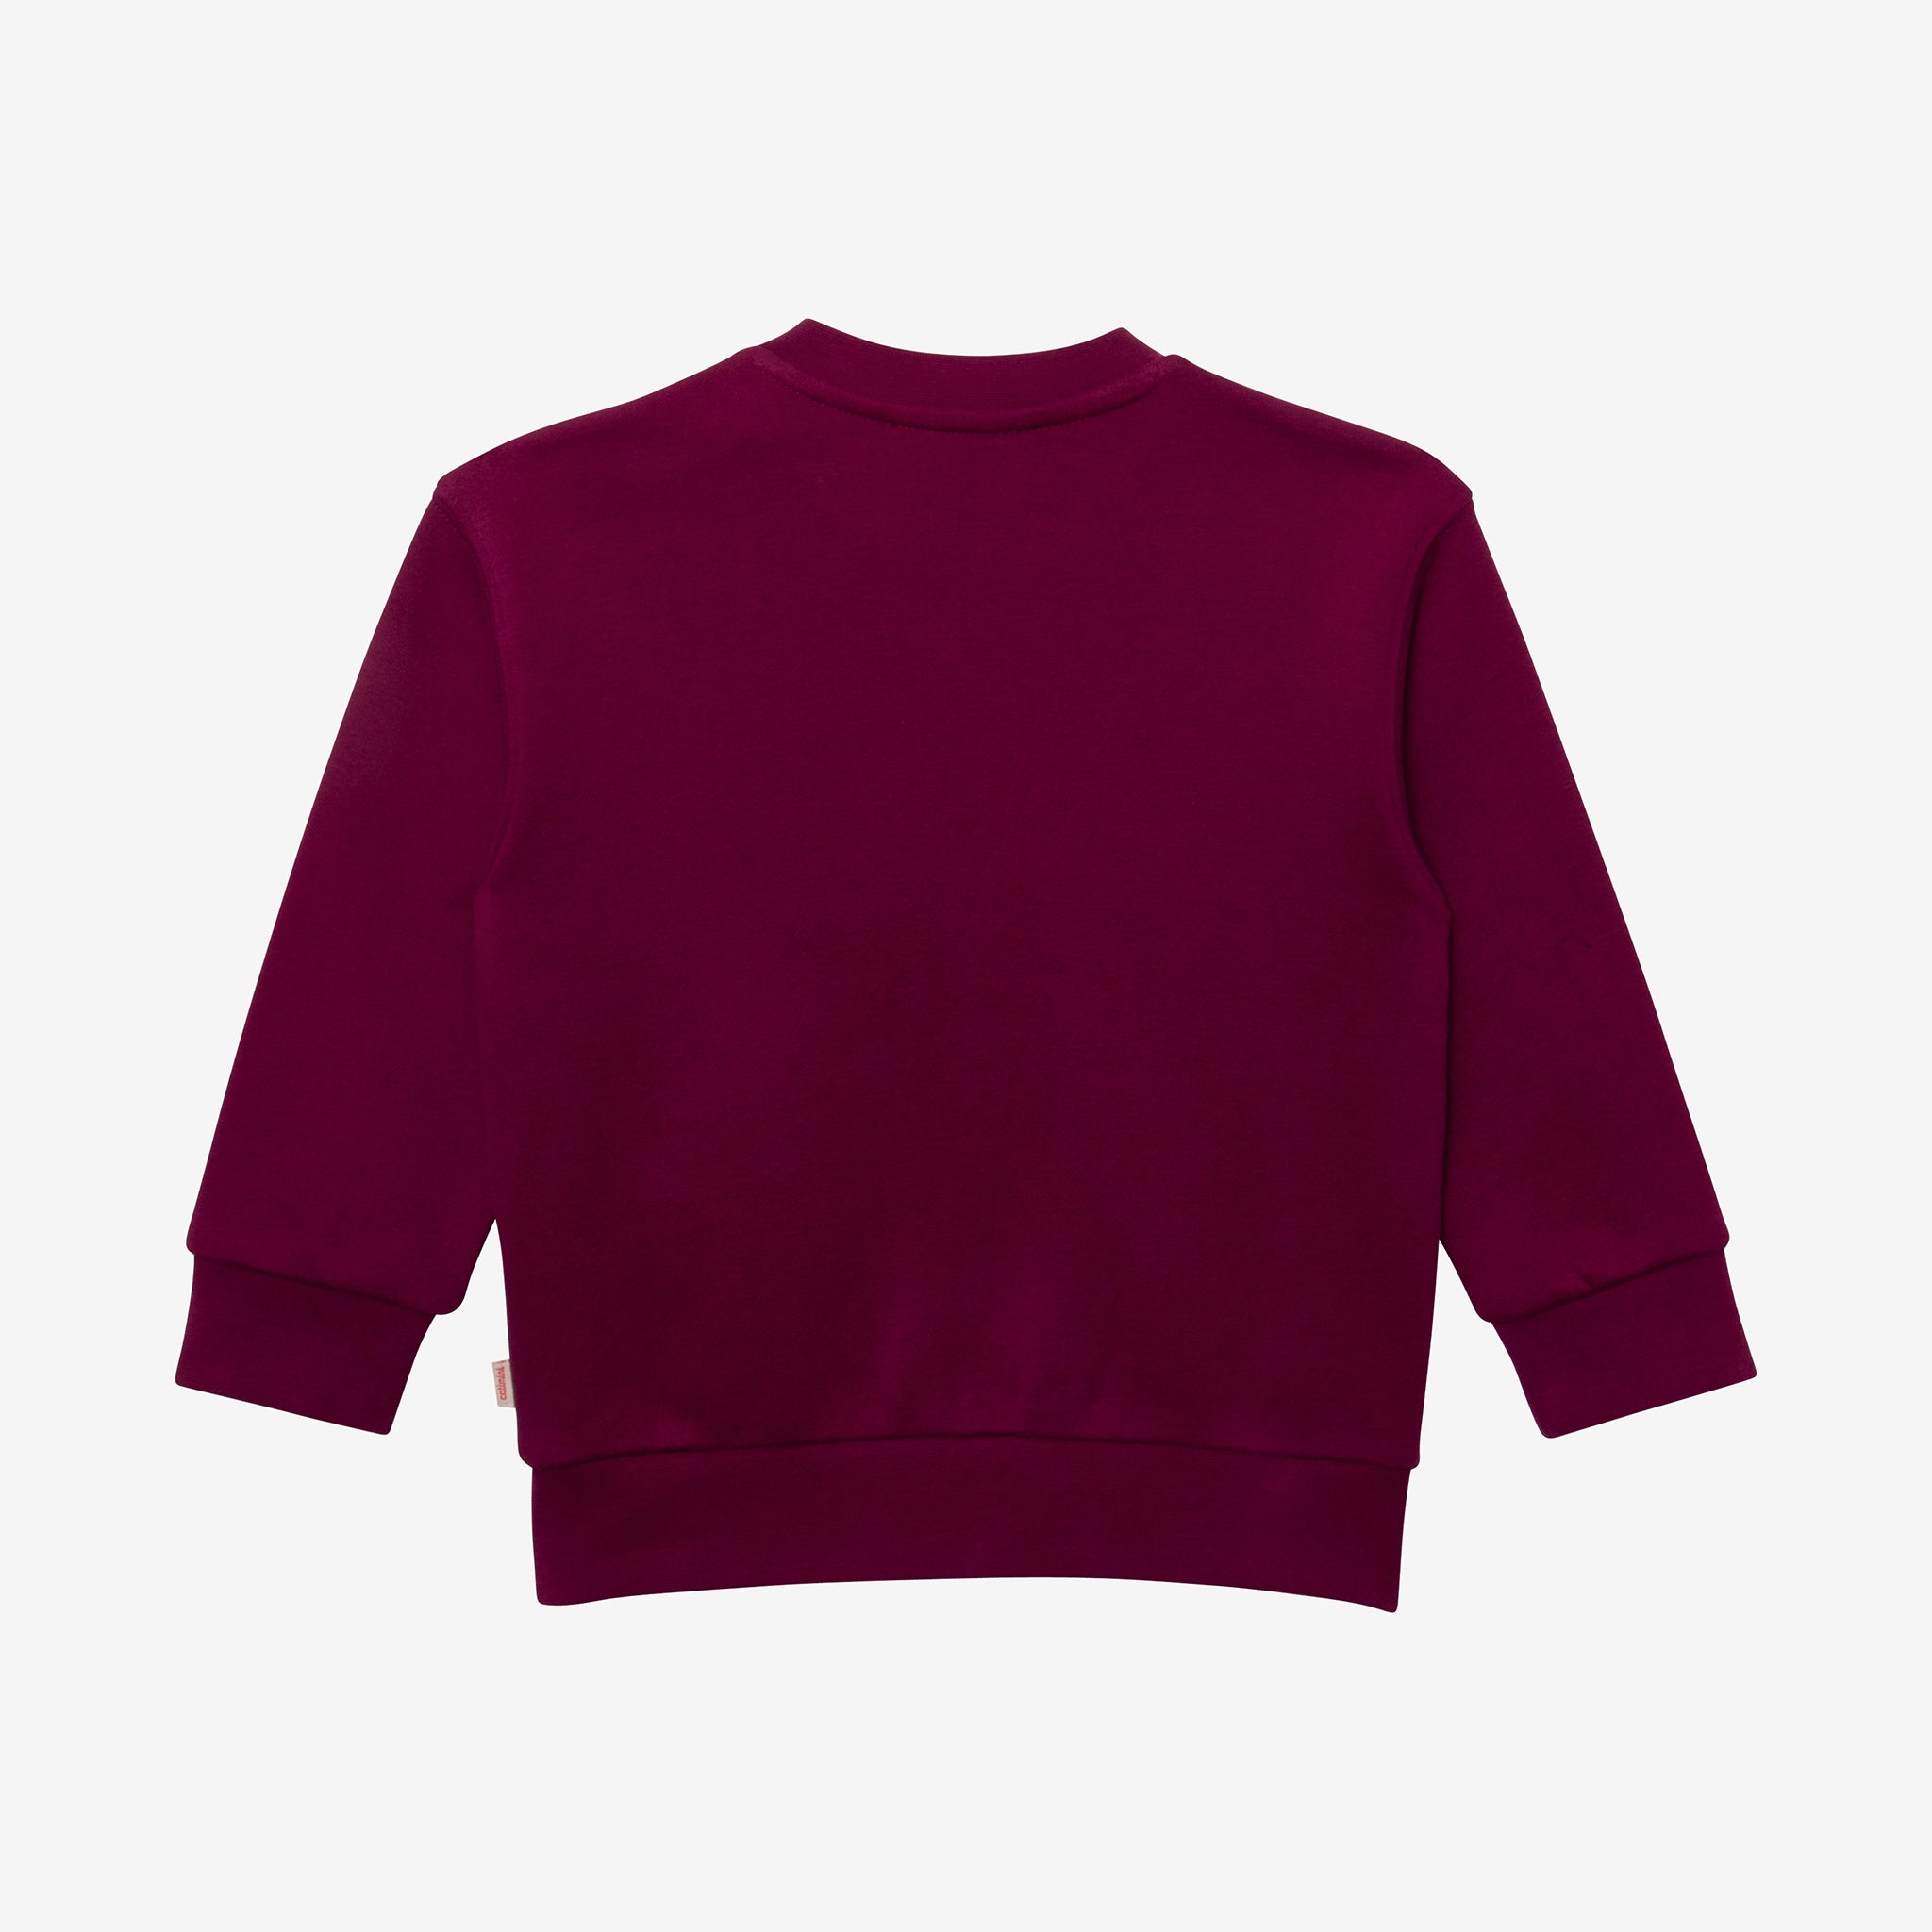 Toddler boys\' purple Catimini sweatshirt USA 